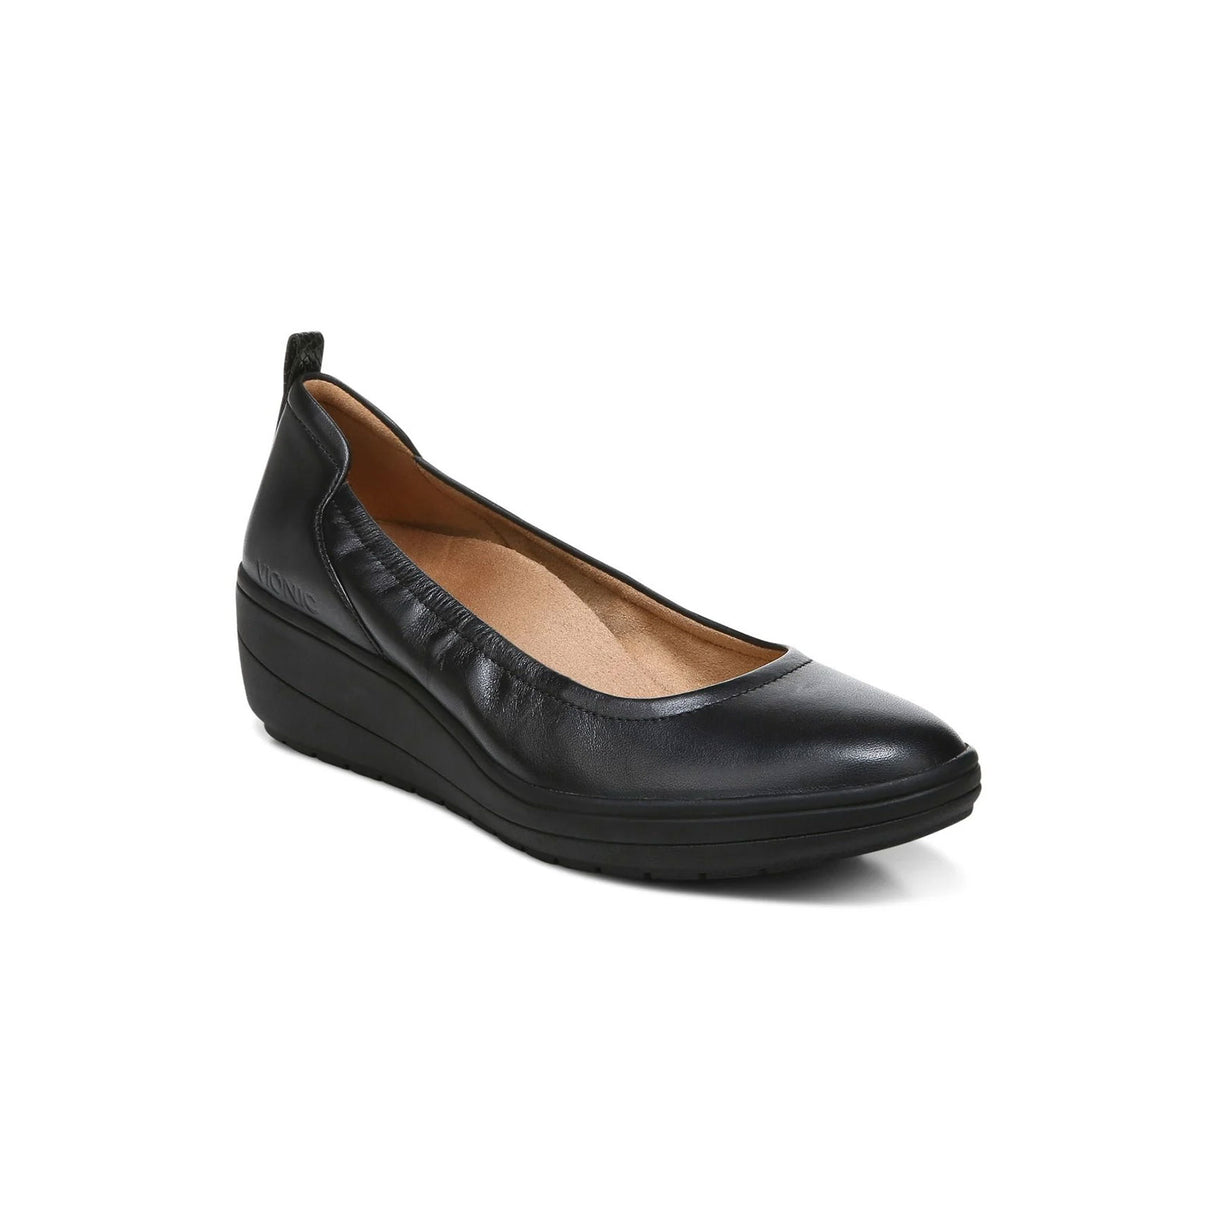 Vionic Jacey Slip On Wedge (Women) - Black/Black Leather  - The Heel Shoe Fitters